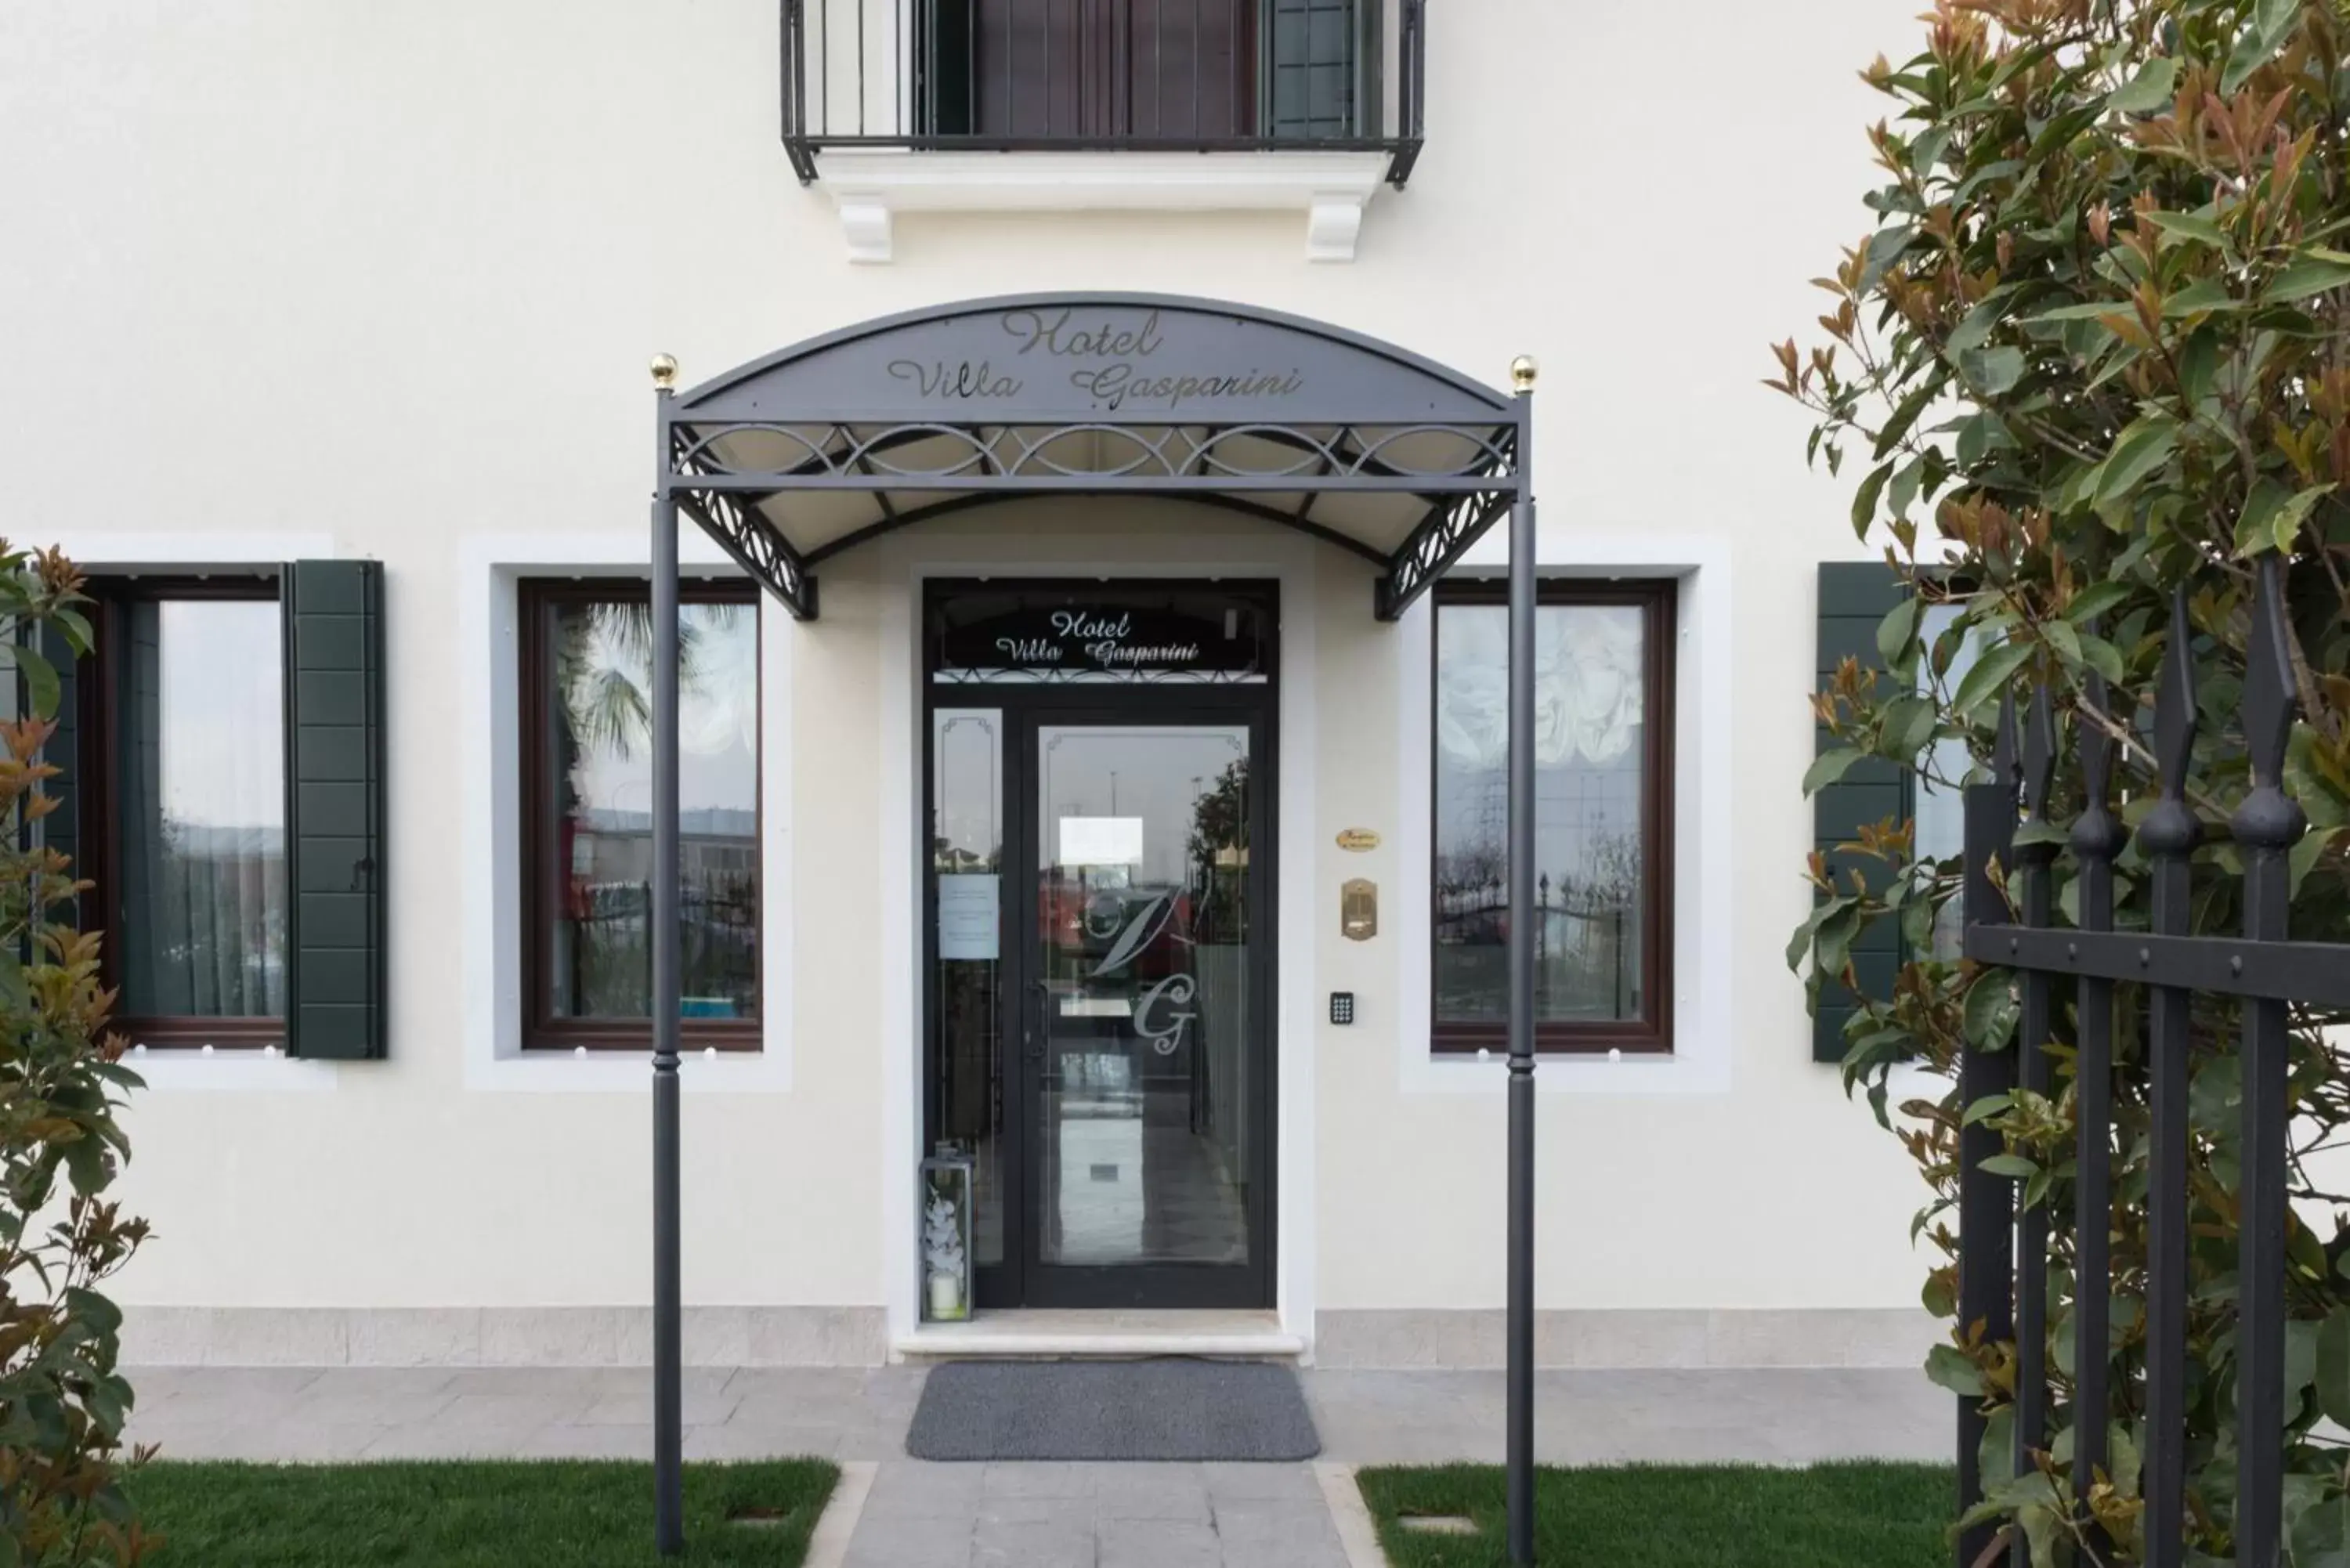 Facade/entrance in Villa Gasparini